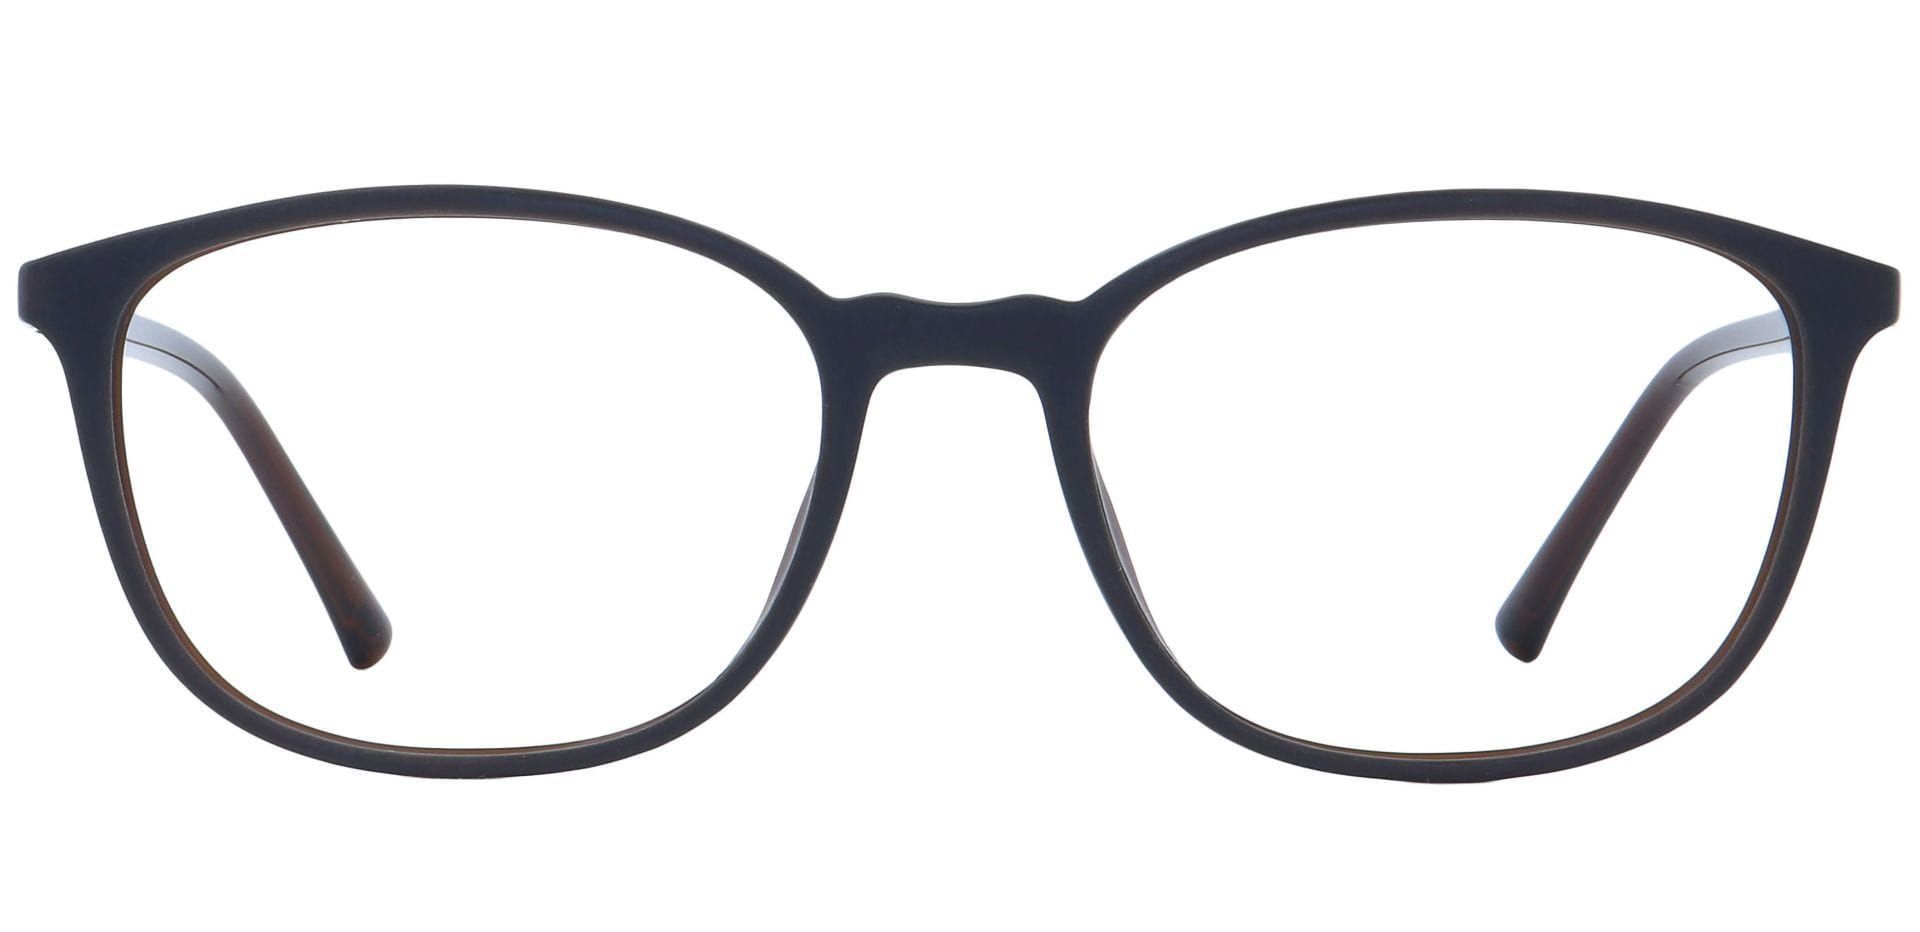 Karleen Oval Lined Bifocal Glasses - Brown